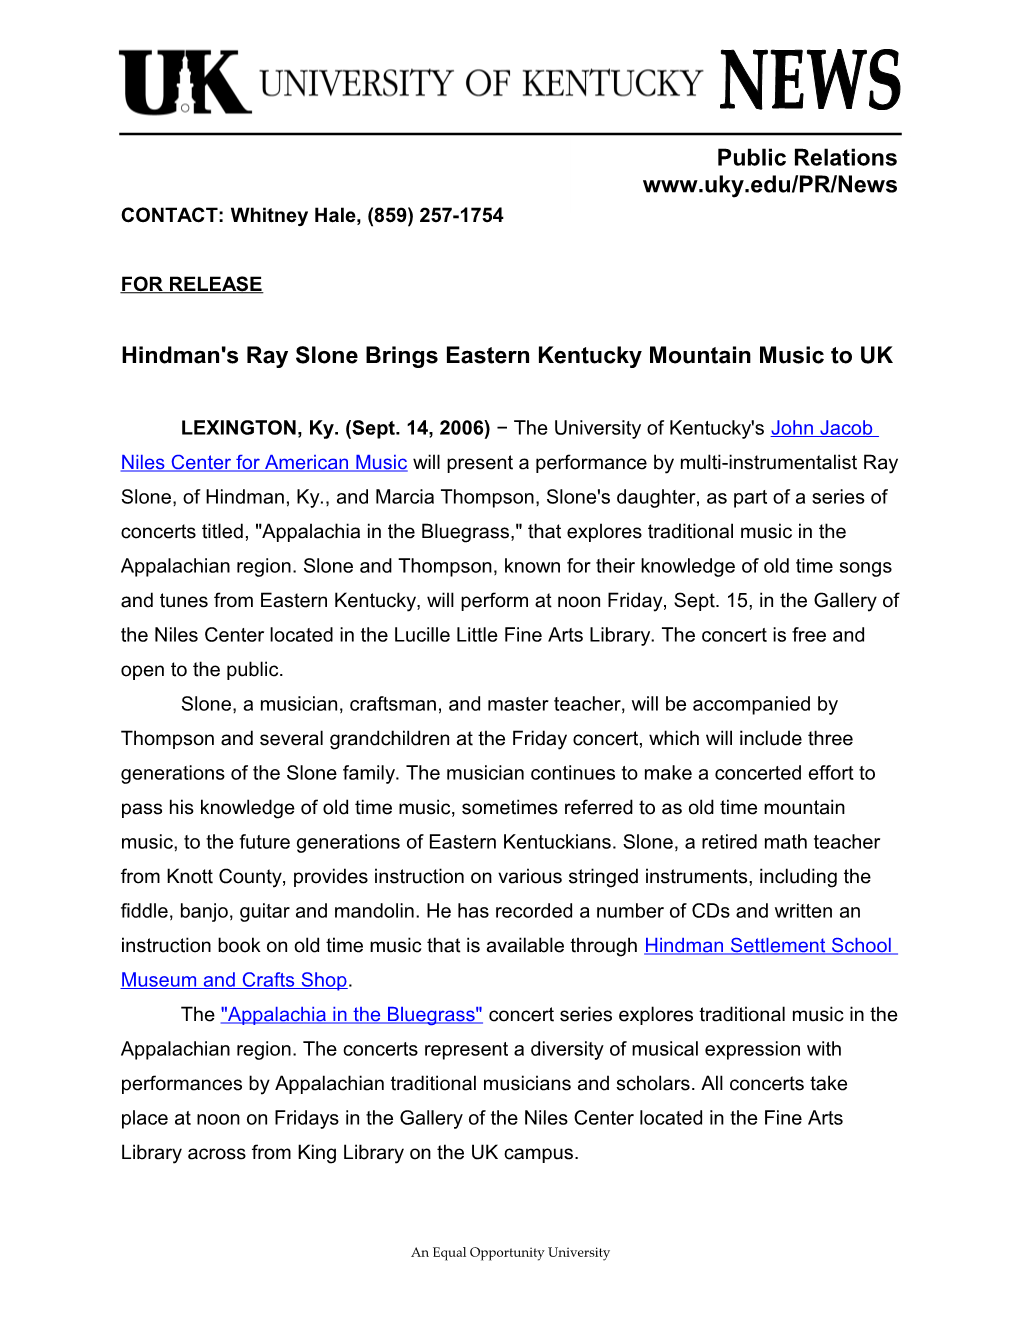 Hindman's Ray Slone Brings Eastern Kentucky Mountain Music to UK